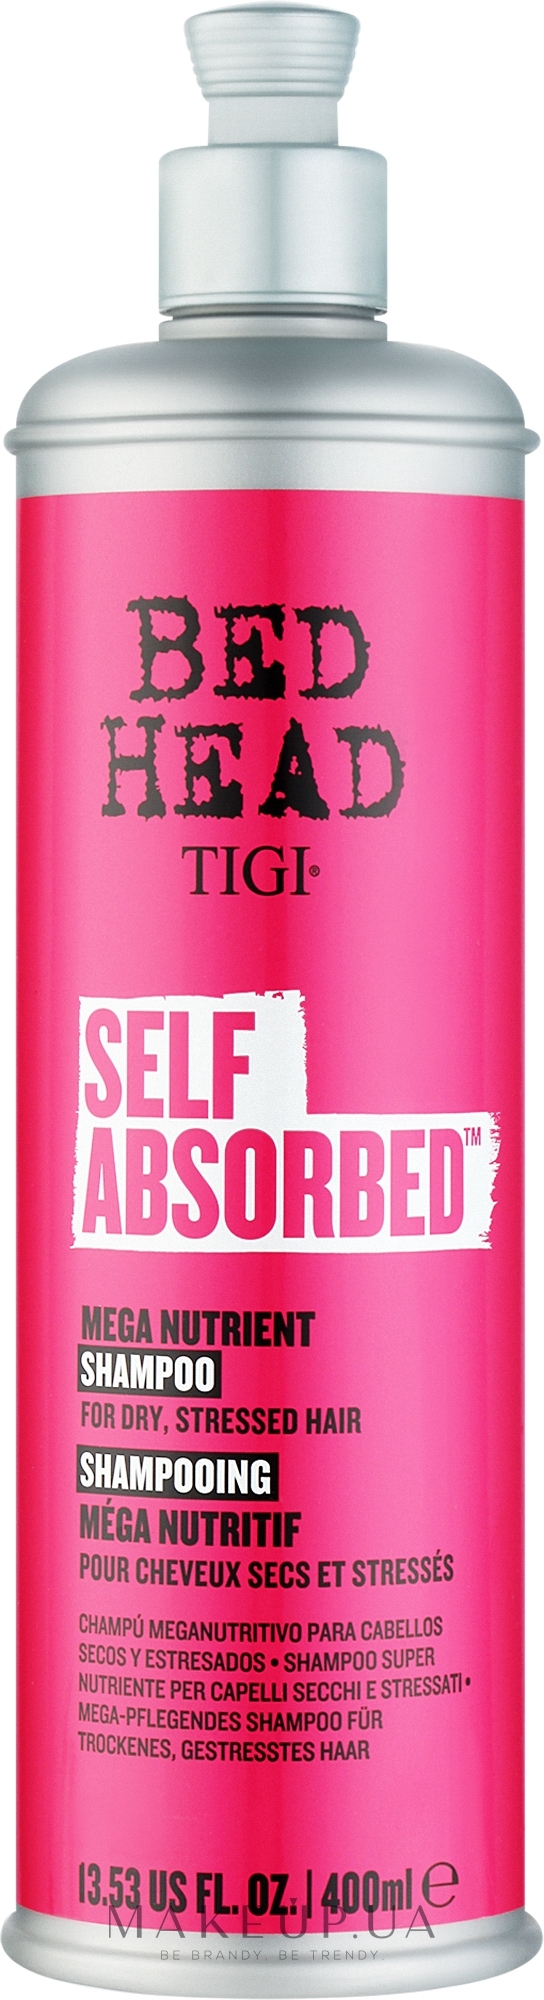 Шампунь обогащенный витаминами - Tigi Bed Head Self Absorbed Mega Nutrient Shampoo — фото 400ml